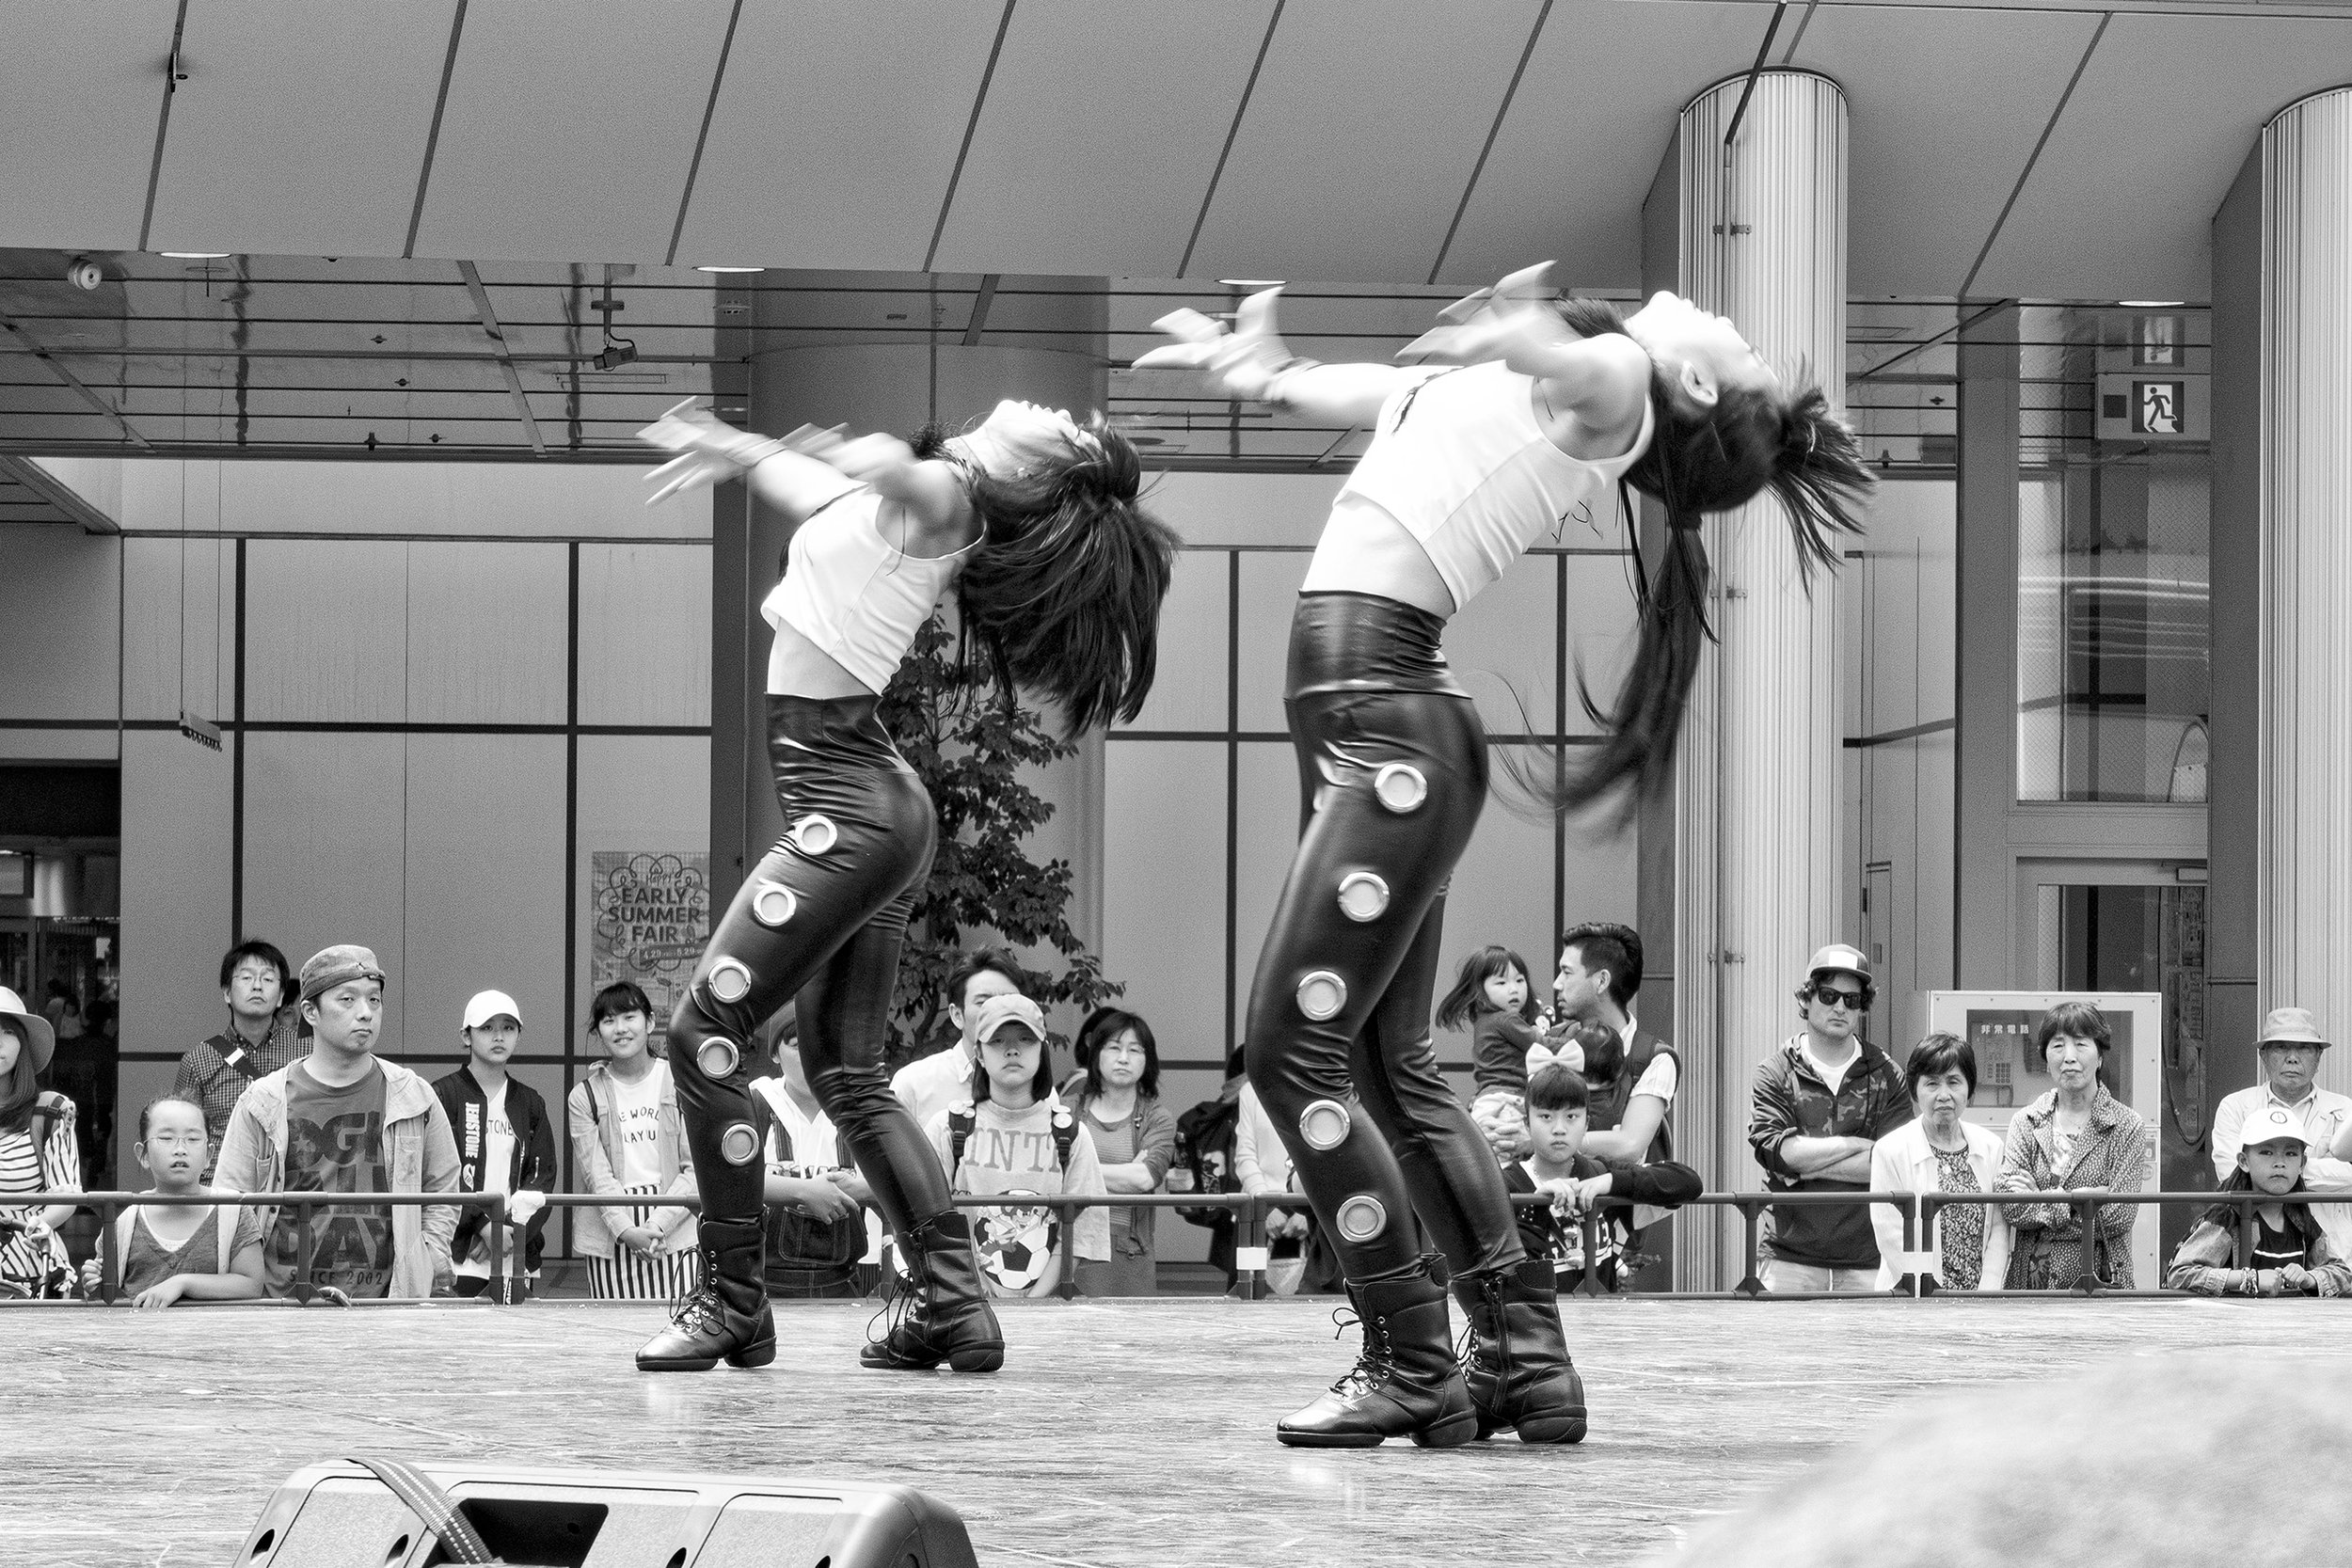 Medium_Nagoya Hisaya Odori Park underground shopping centre dance competition 2.jpg